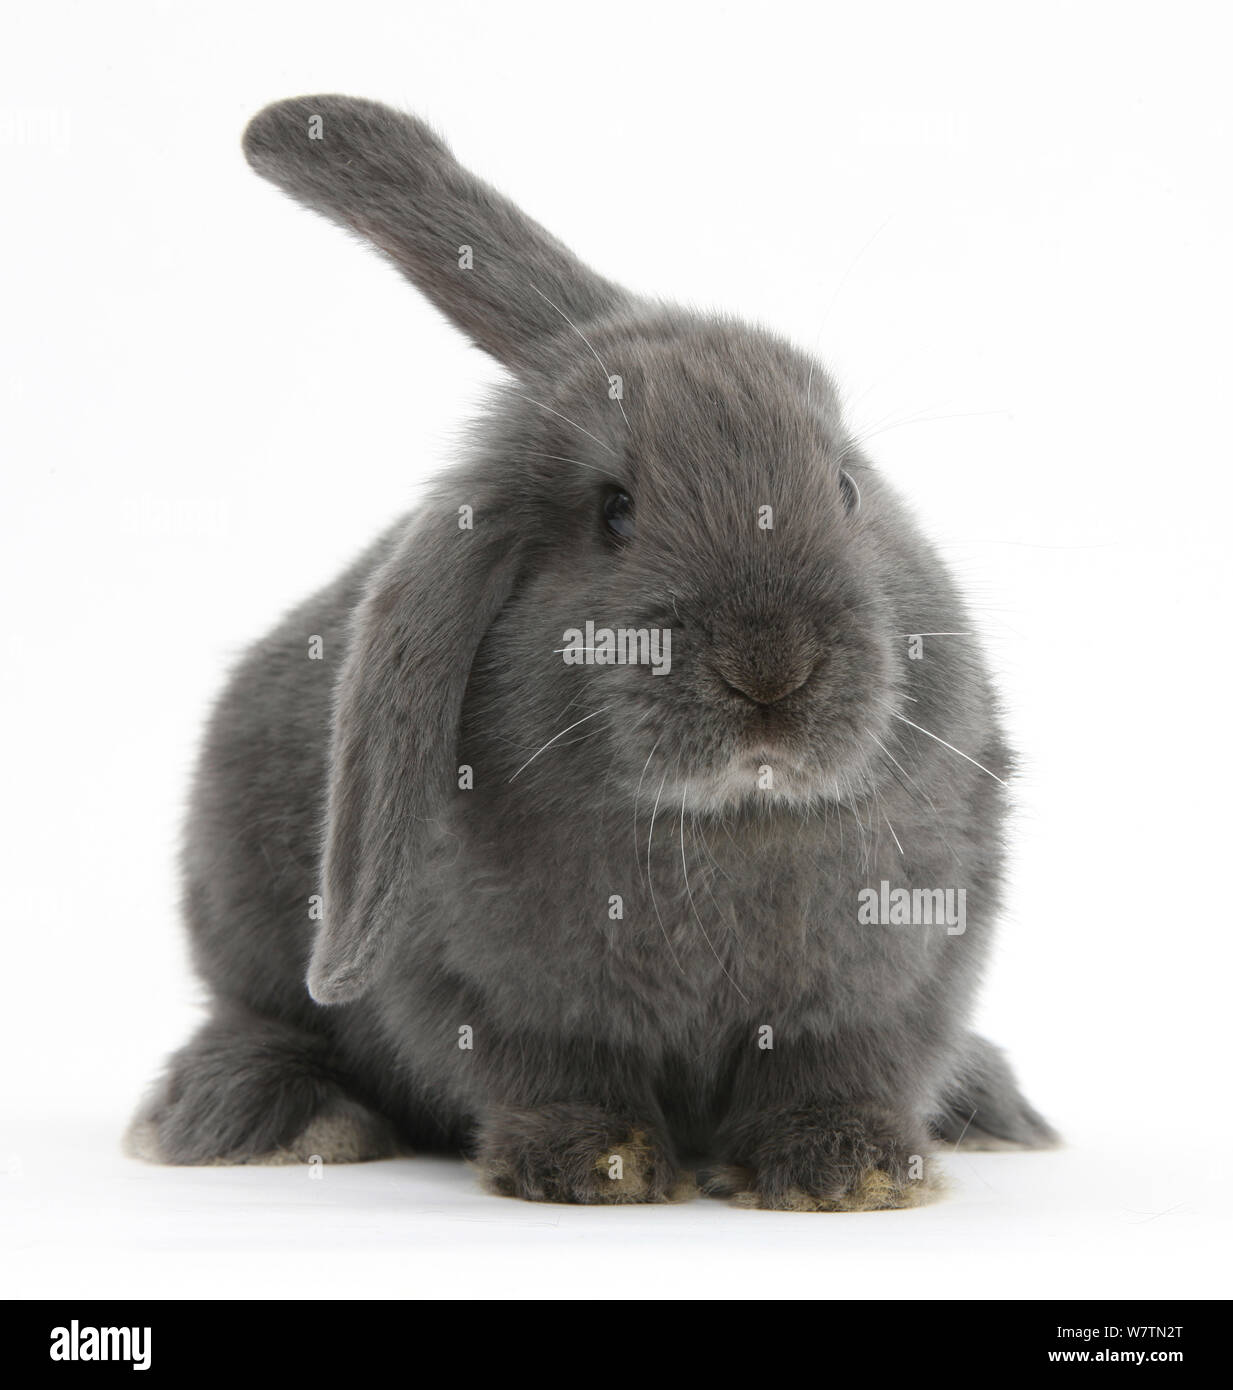 Blue-grey floppy-eared rabbit, against white background Stock Photo